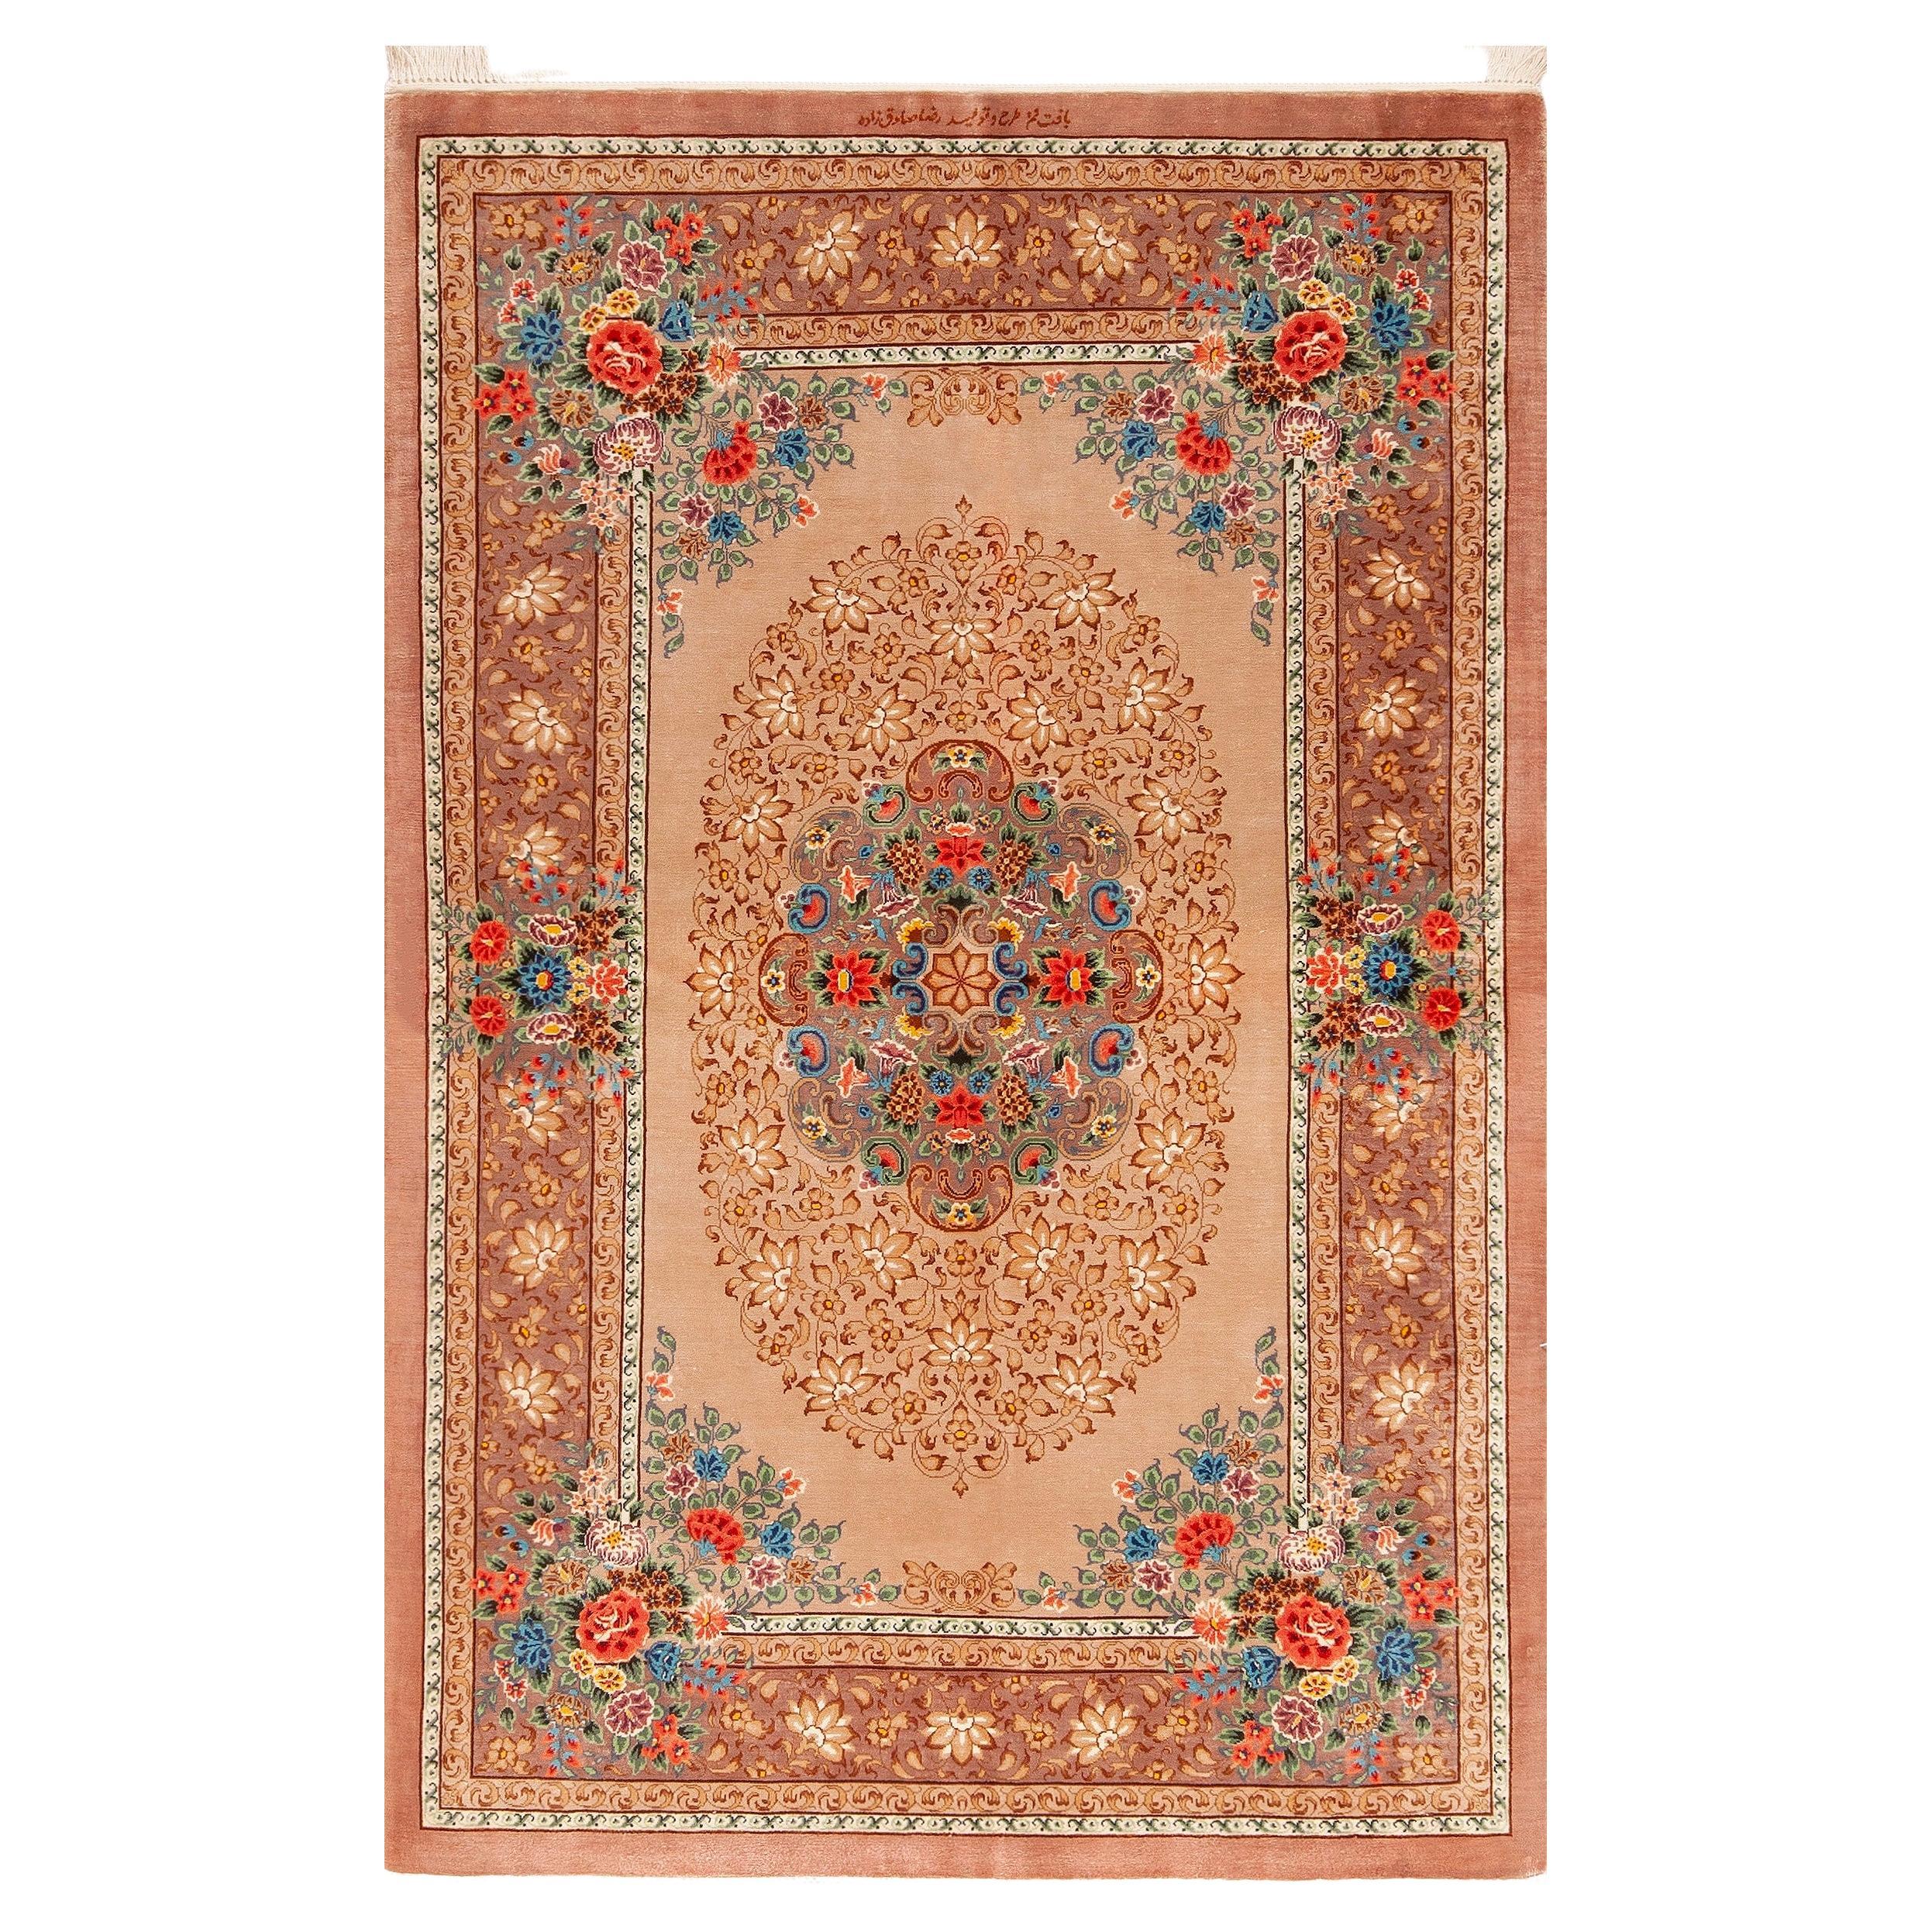 Luxurious Small Fine Floral Vintage Persian Silk Qum Rug 2'7" x 4'1"